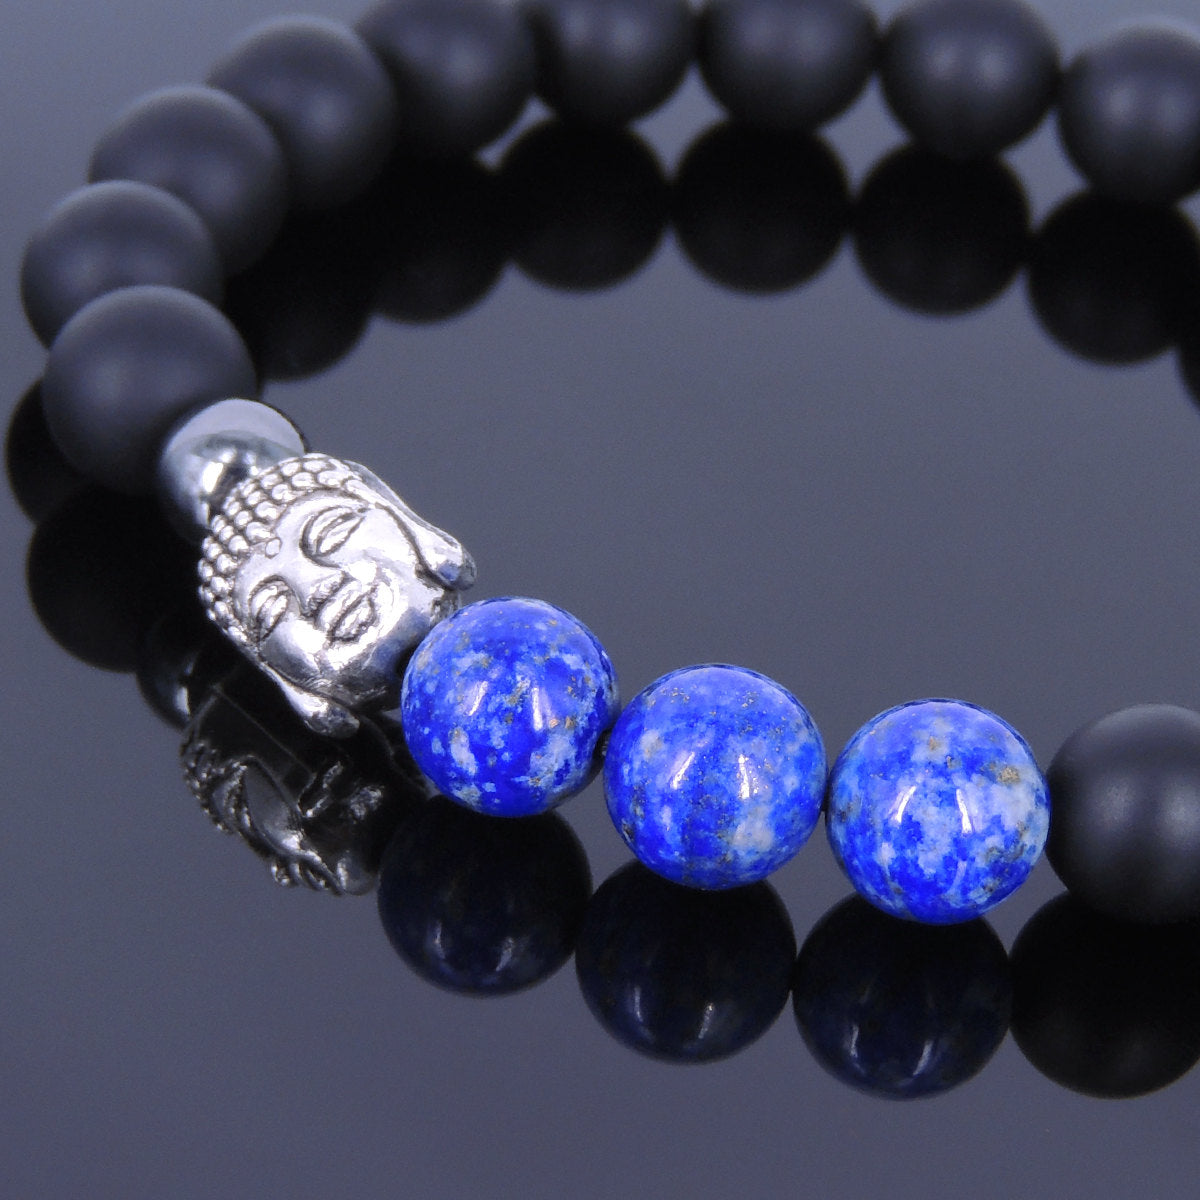 Lapis Lazuli, Matte Black Onyx & Hematite Healing Gemstone Bracelet with S925 Sterling Silver Sakyamuni Buddha - Handmade by Gem & Silver TSB032